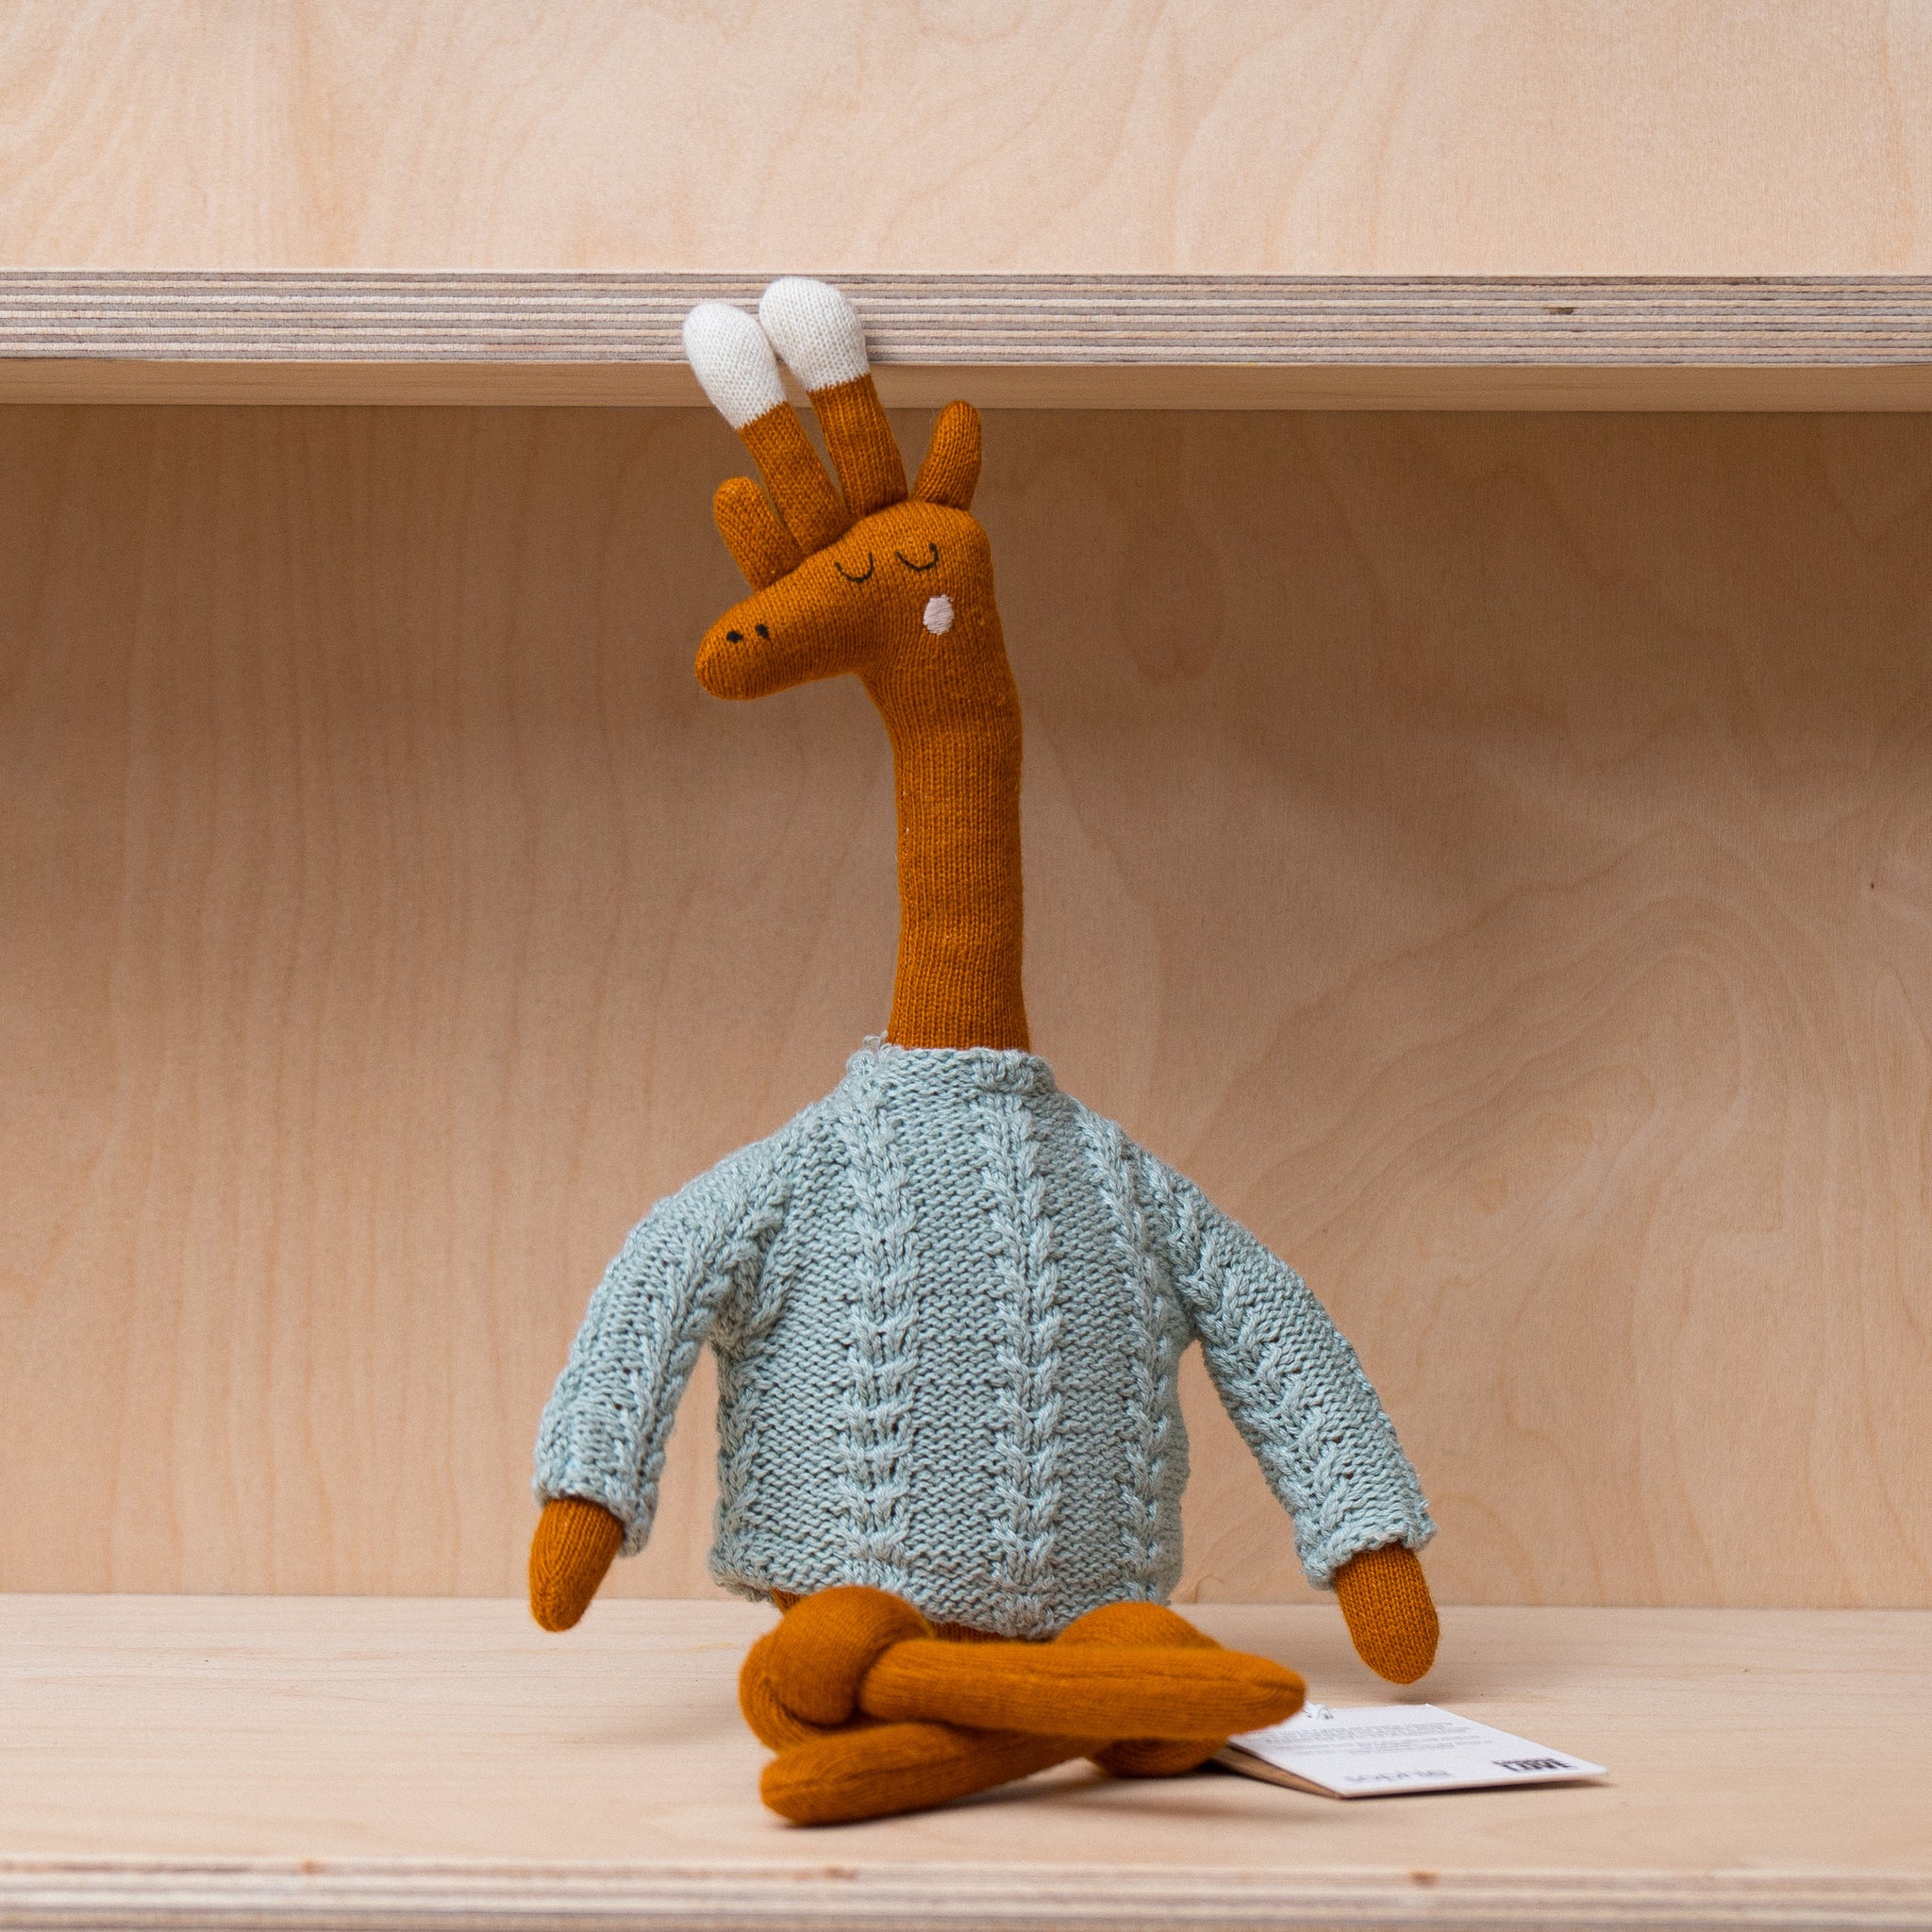 Sophie Home - Stuffed Animal Ragdoll Toy - Giraffe